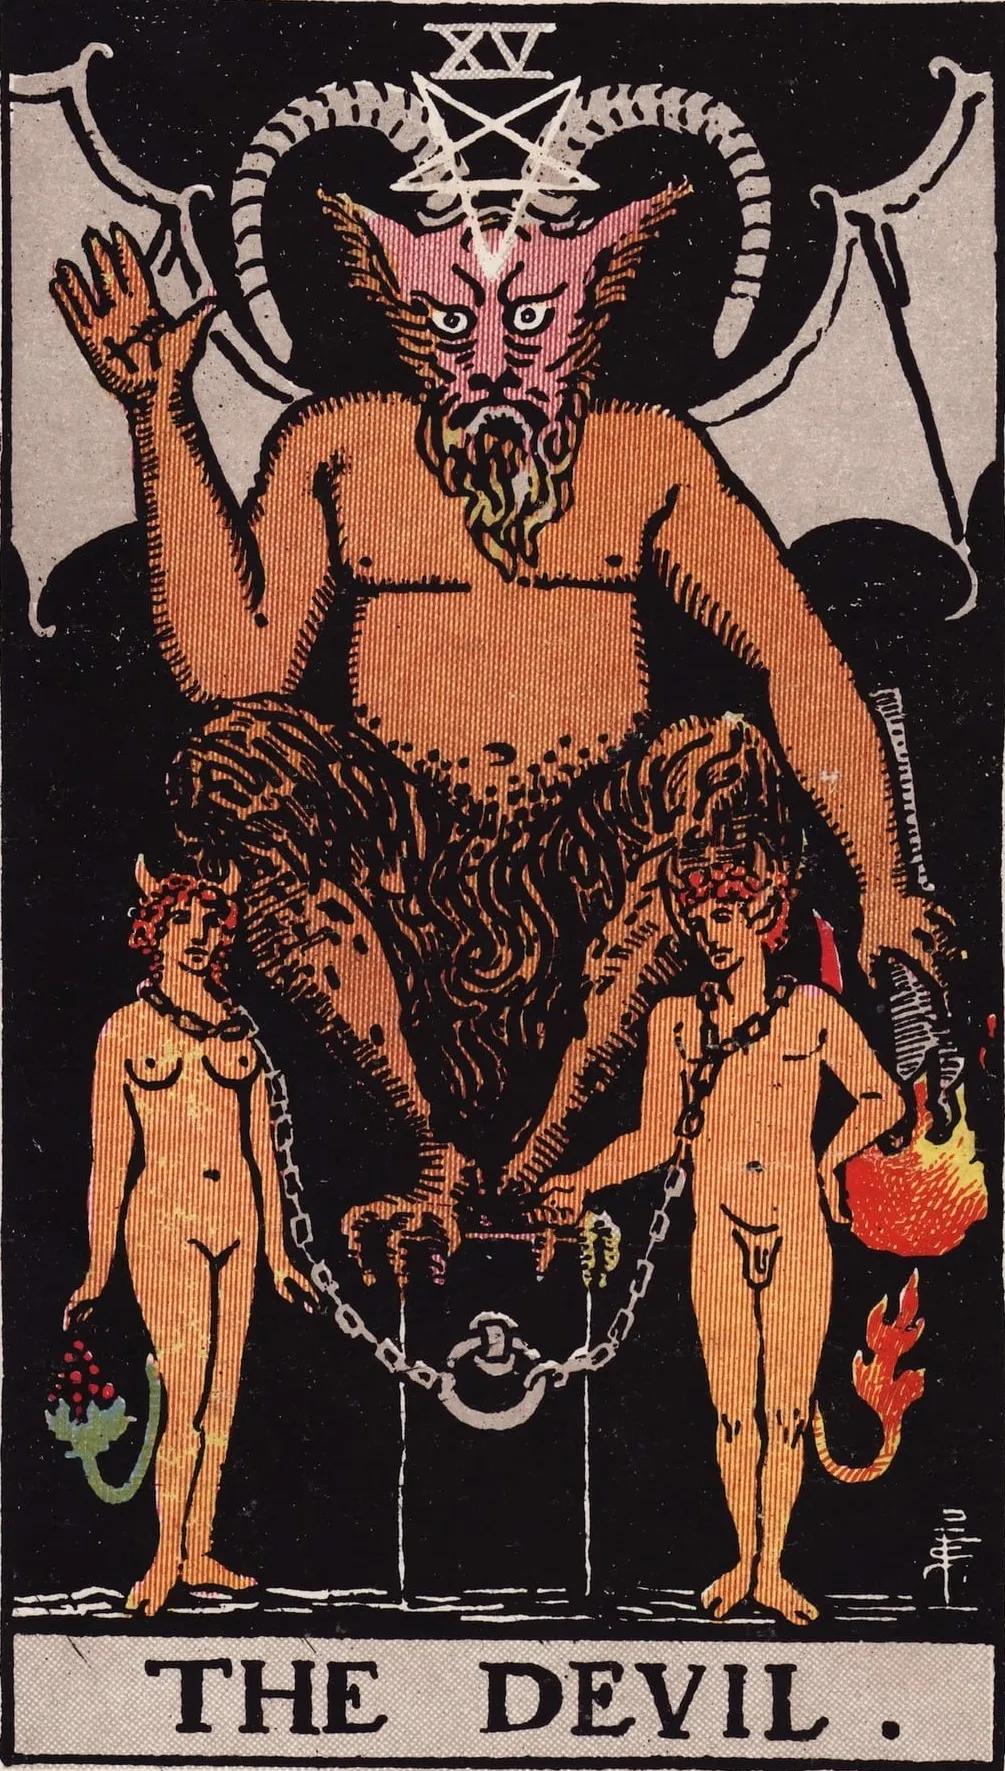 The Devil Card